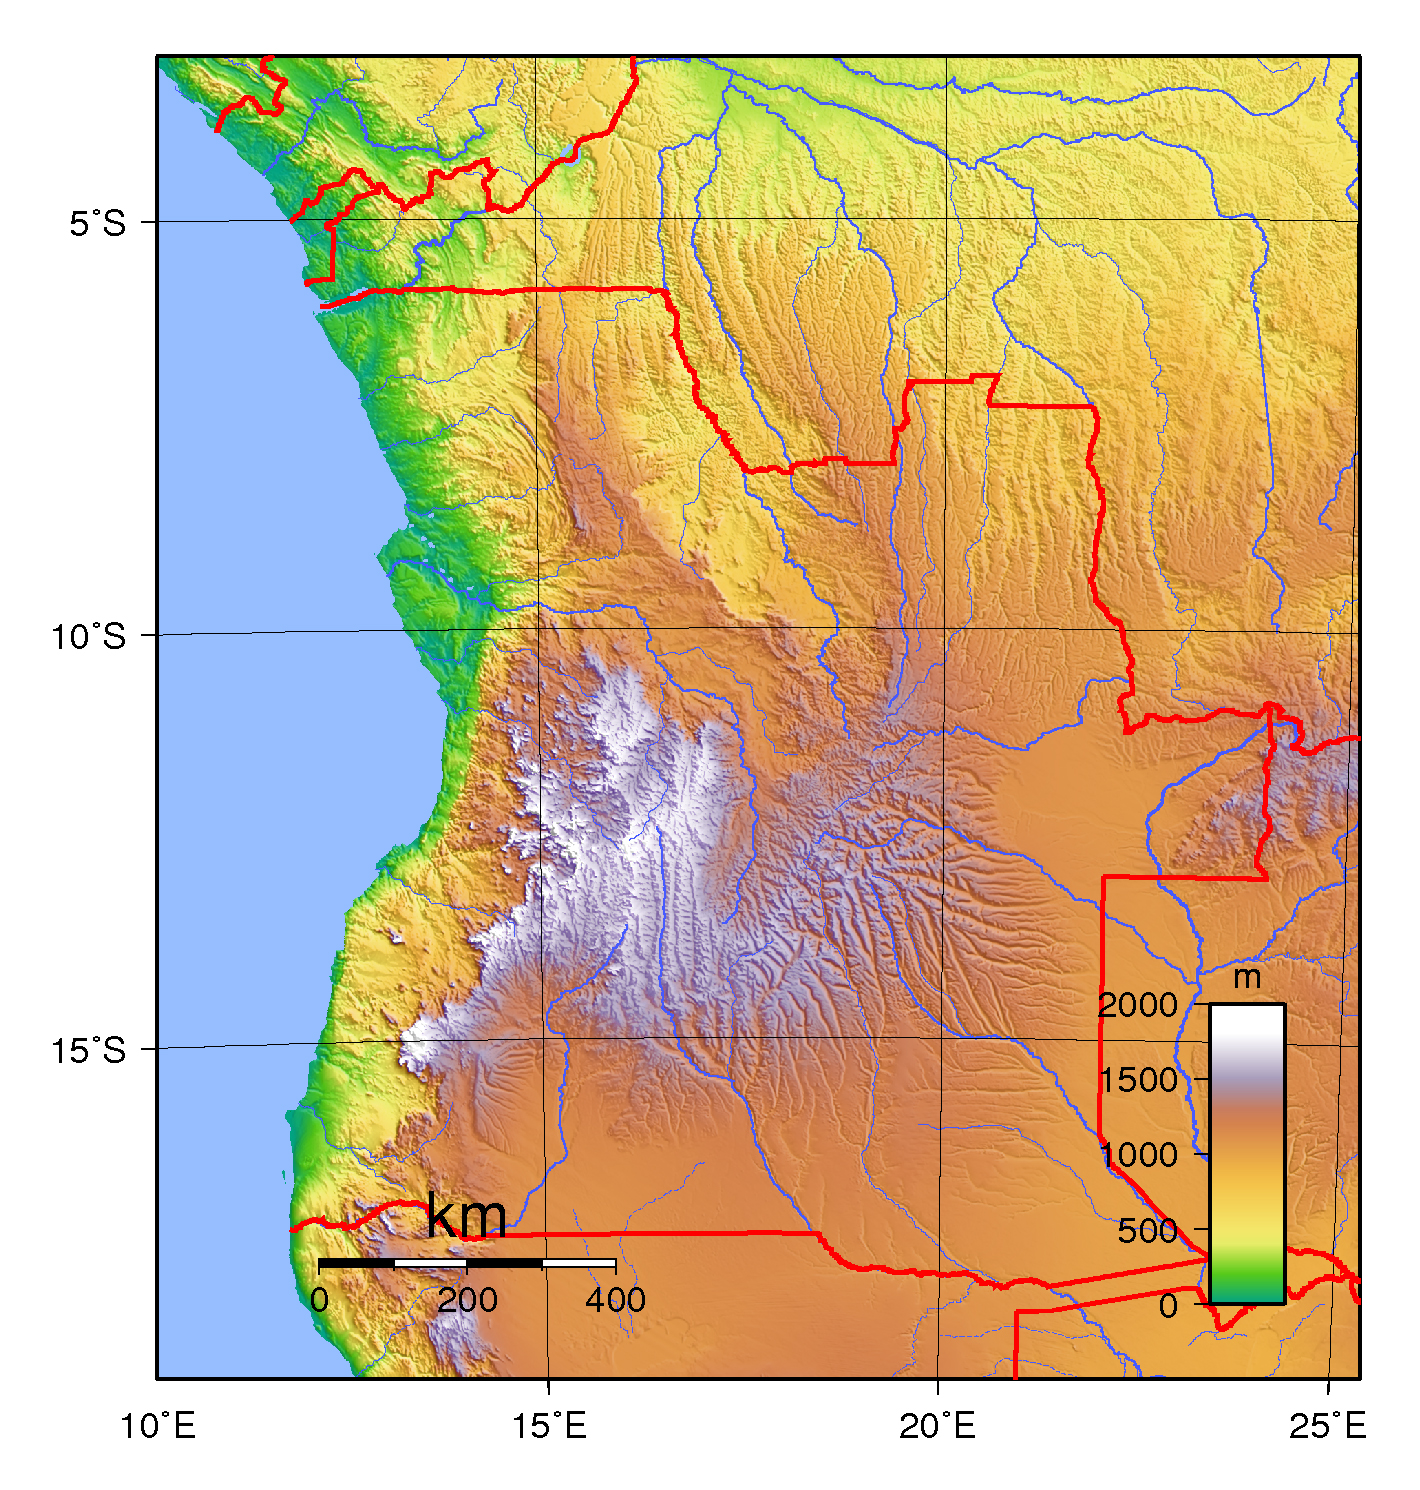 Angola Physical Map